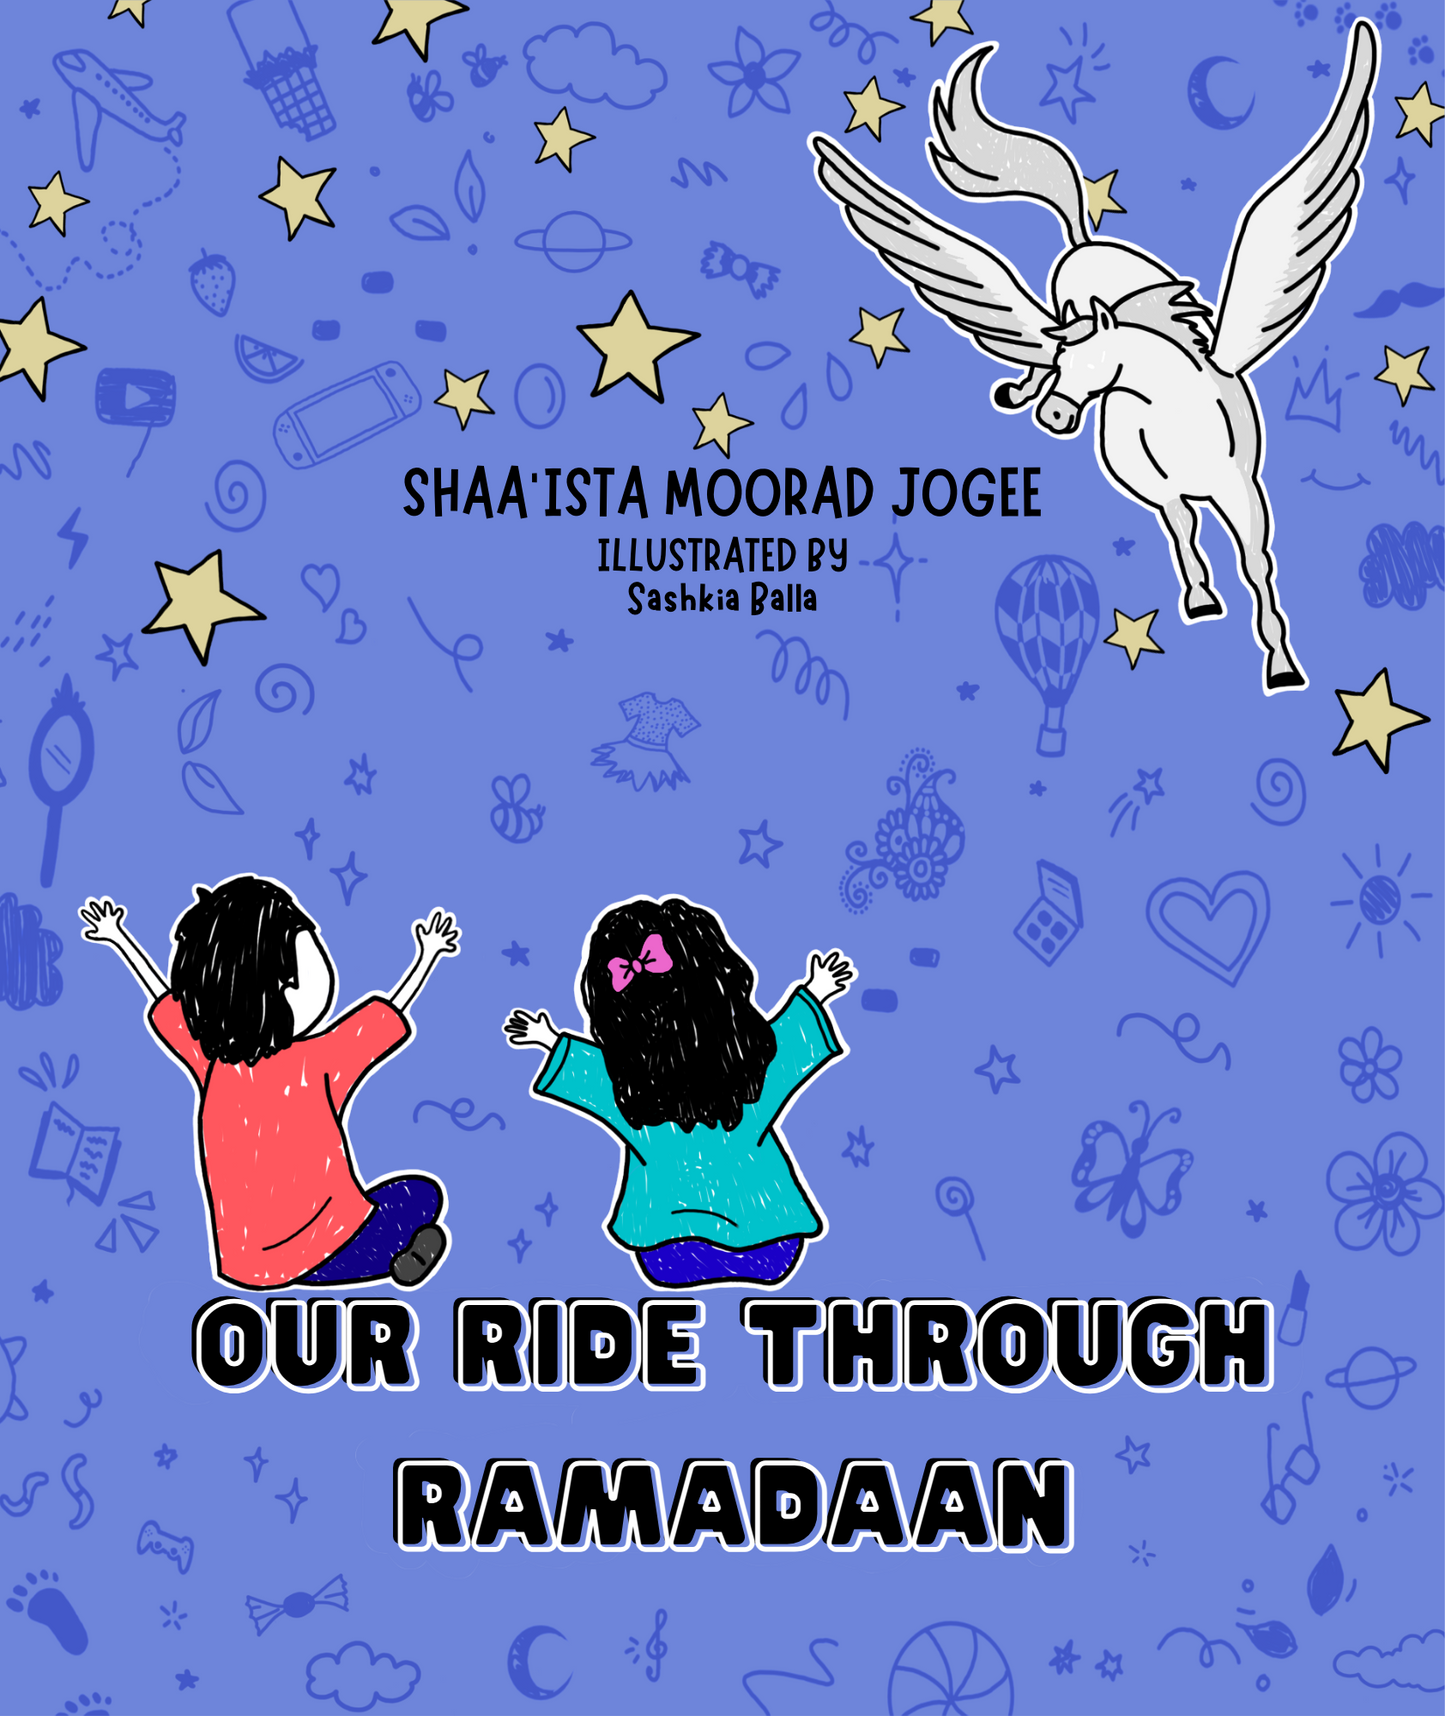 Our Ride Through Ramadan by Shaa'ista Moorad Jogee